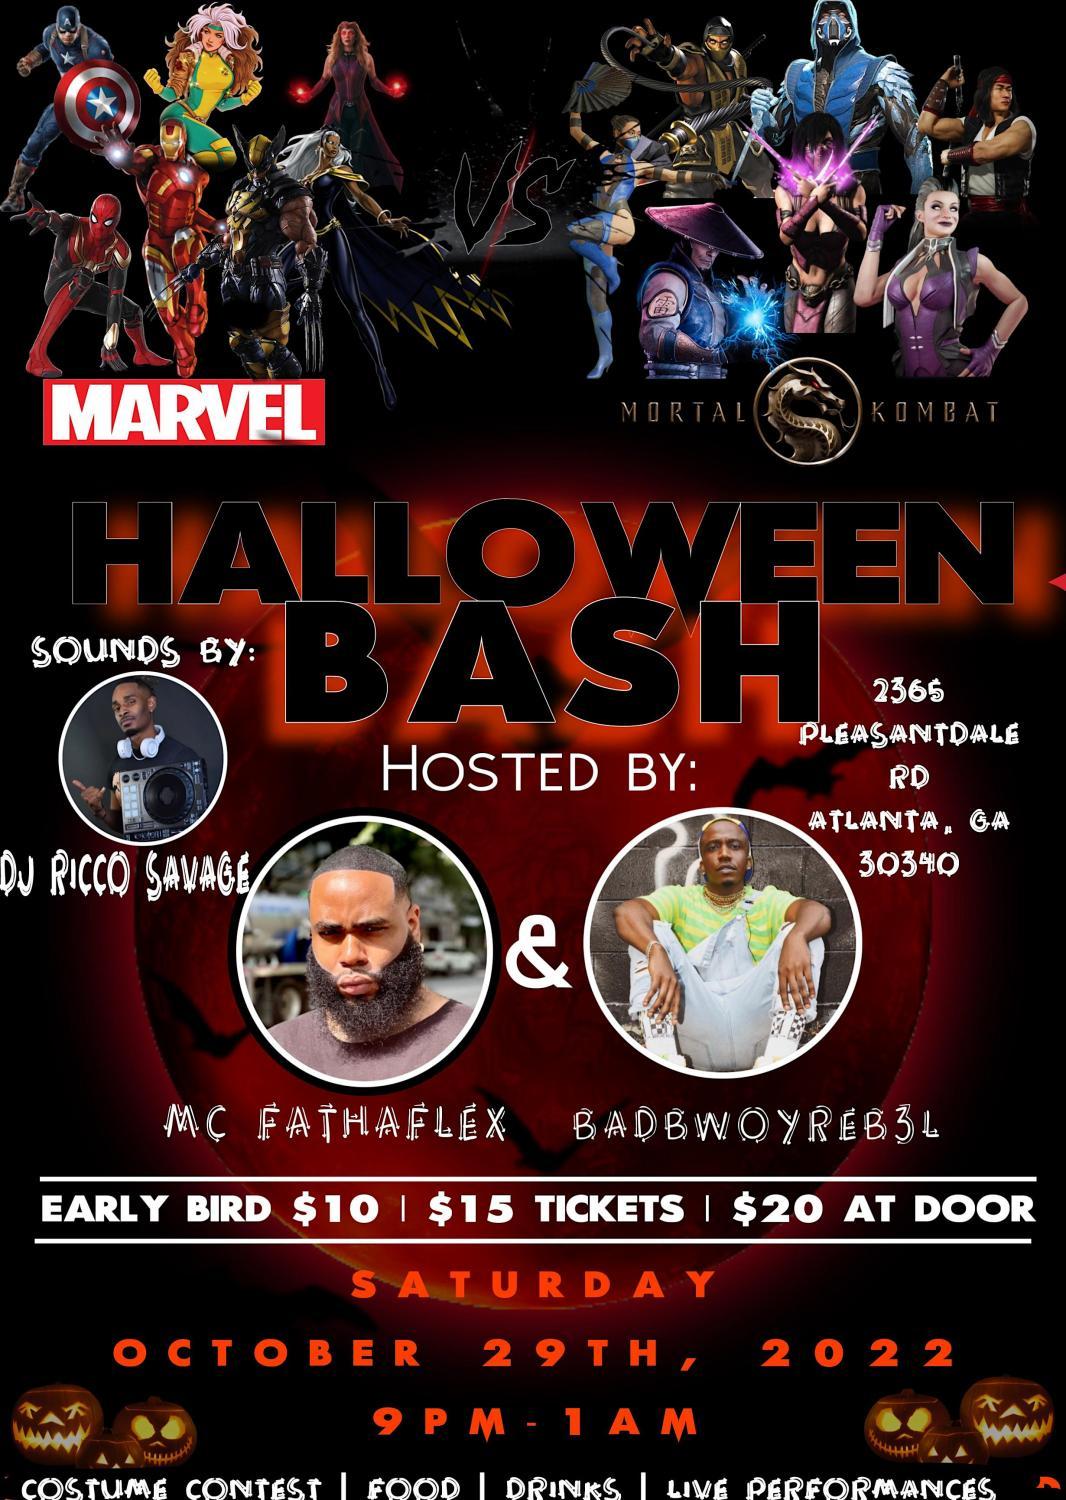 Marvel vs Mortal Kombat Halloween Bash
Sat Oct 29, 8:30 PM - Sun Oct 30, 12:00 AM
in 19 days